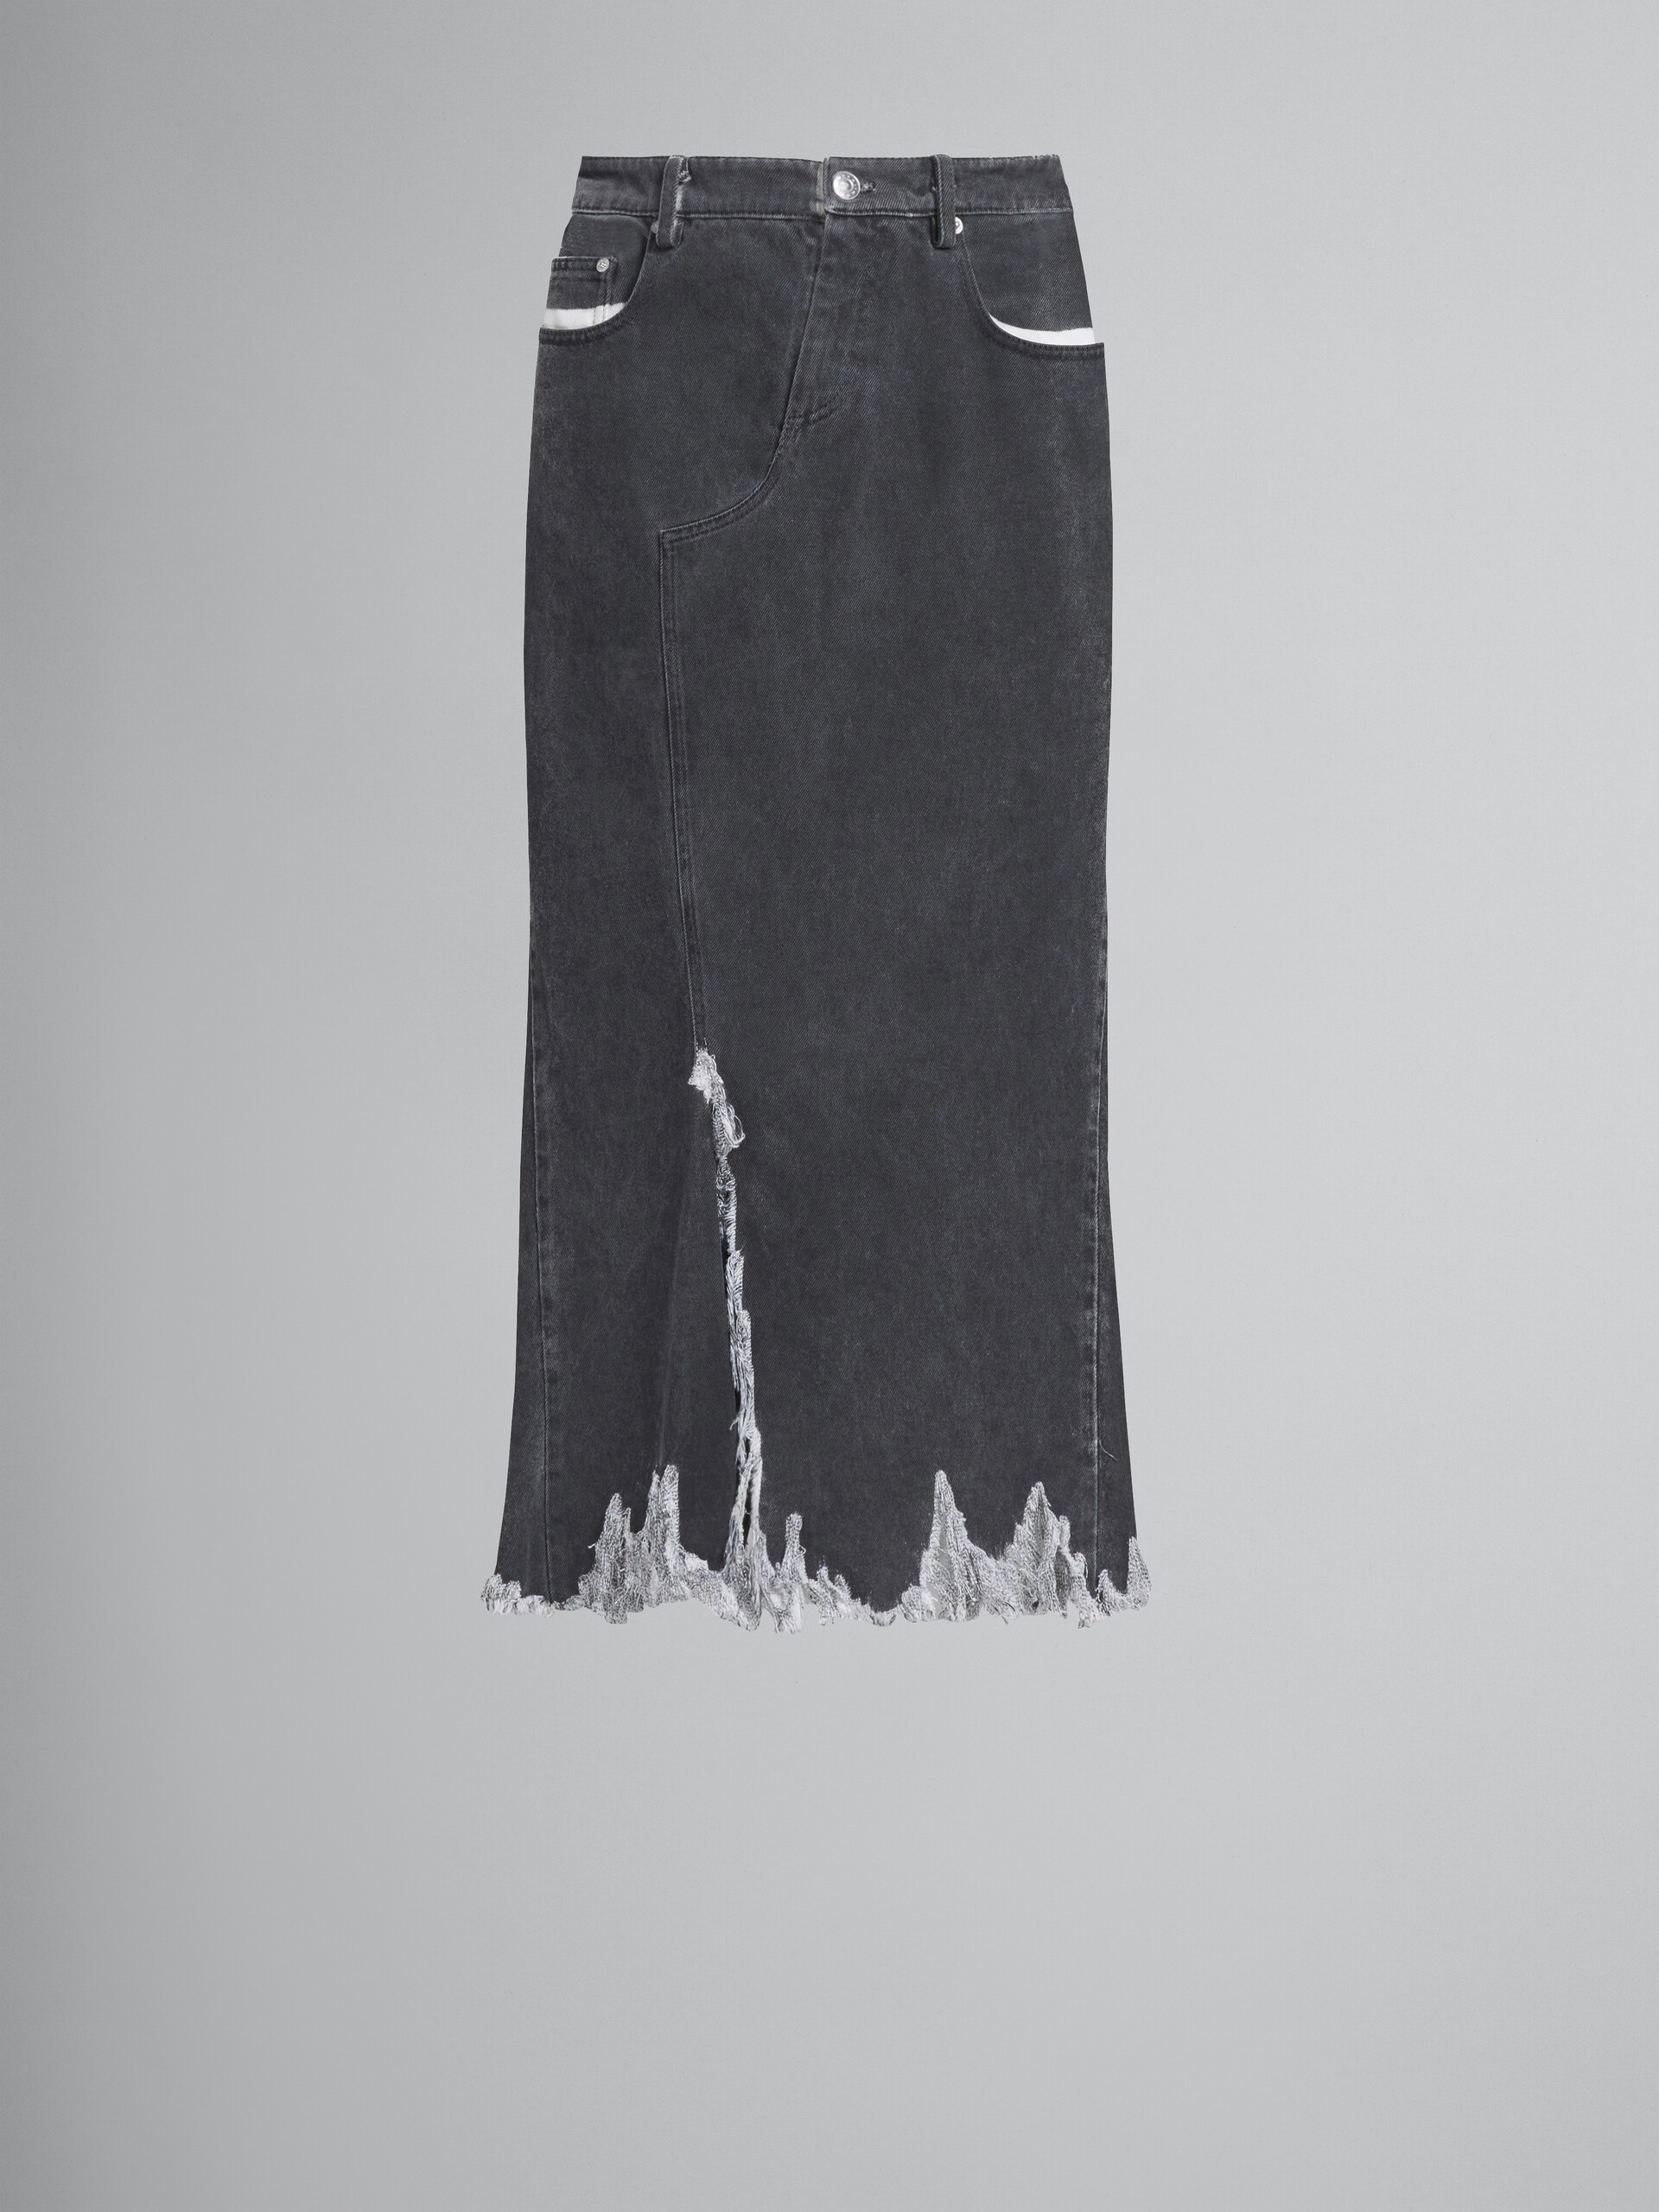 Grey denim skirt with frayed hem - Skirts - Image 1